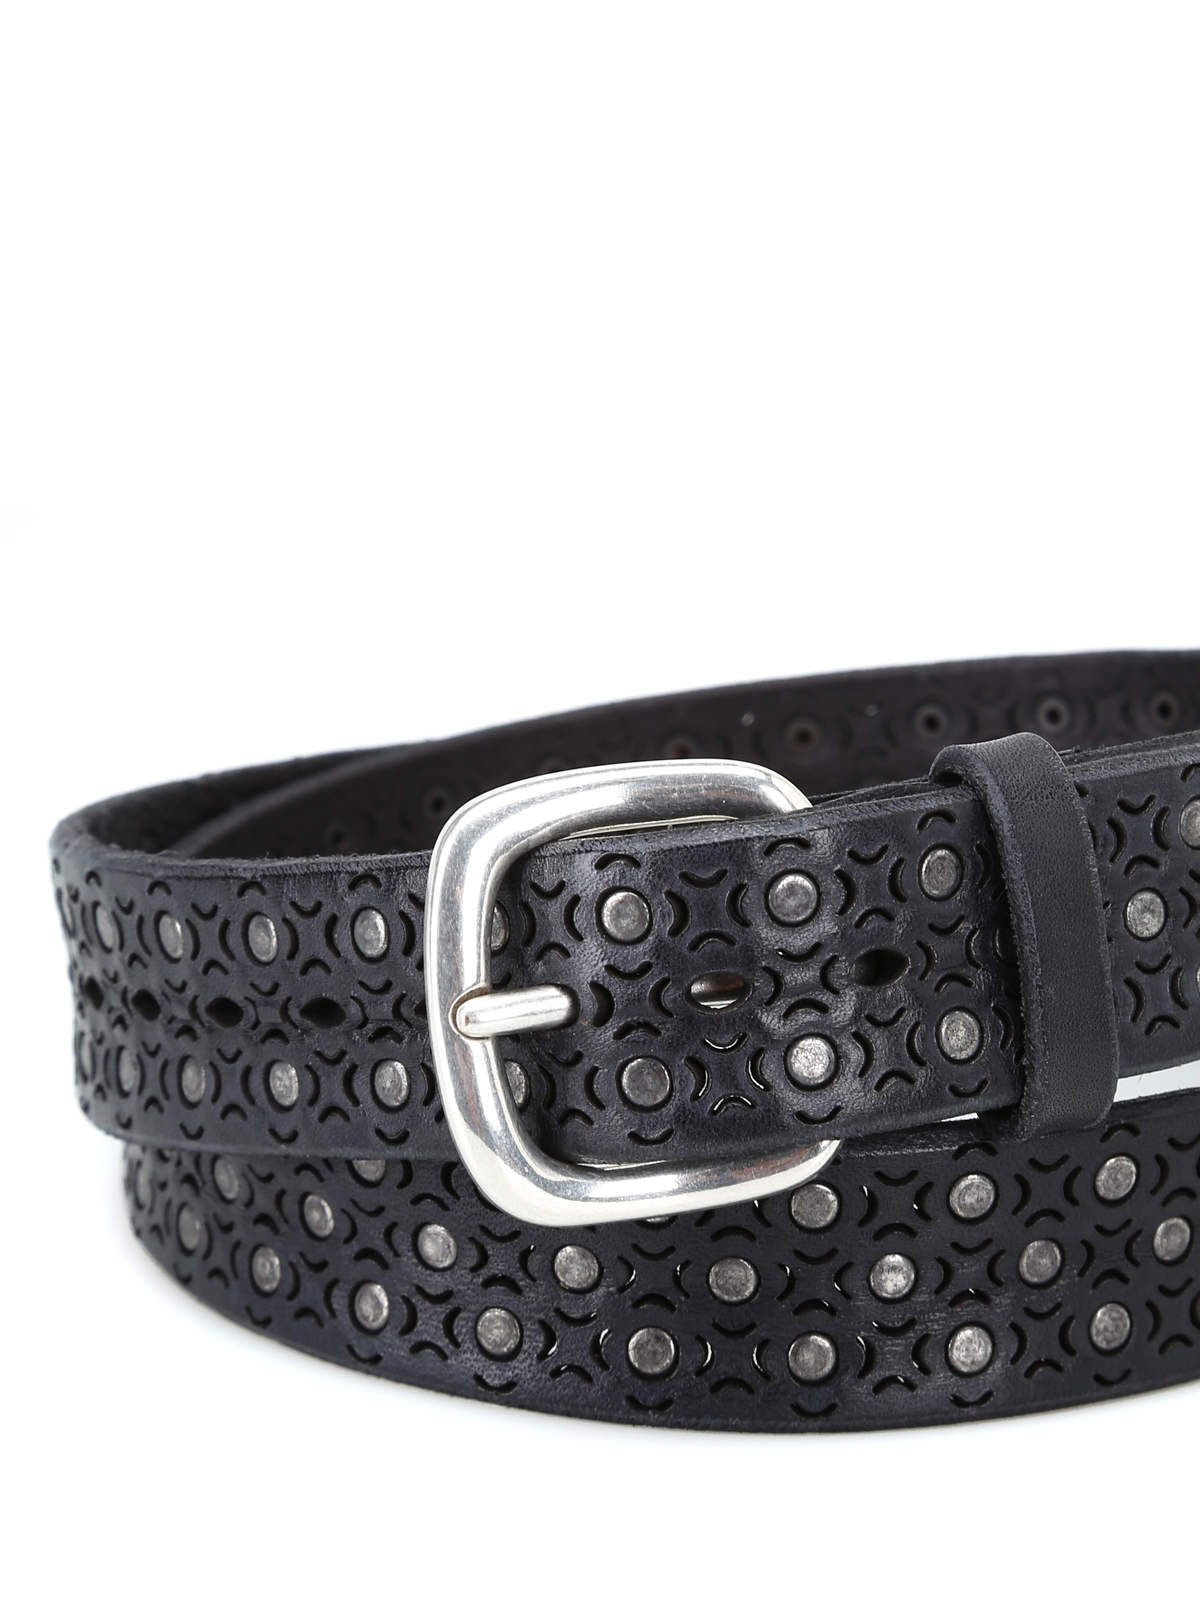 Belts Orciani - Stain vintage studded leather belt - U07795STAINNERO